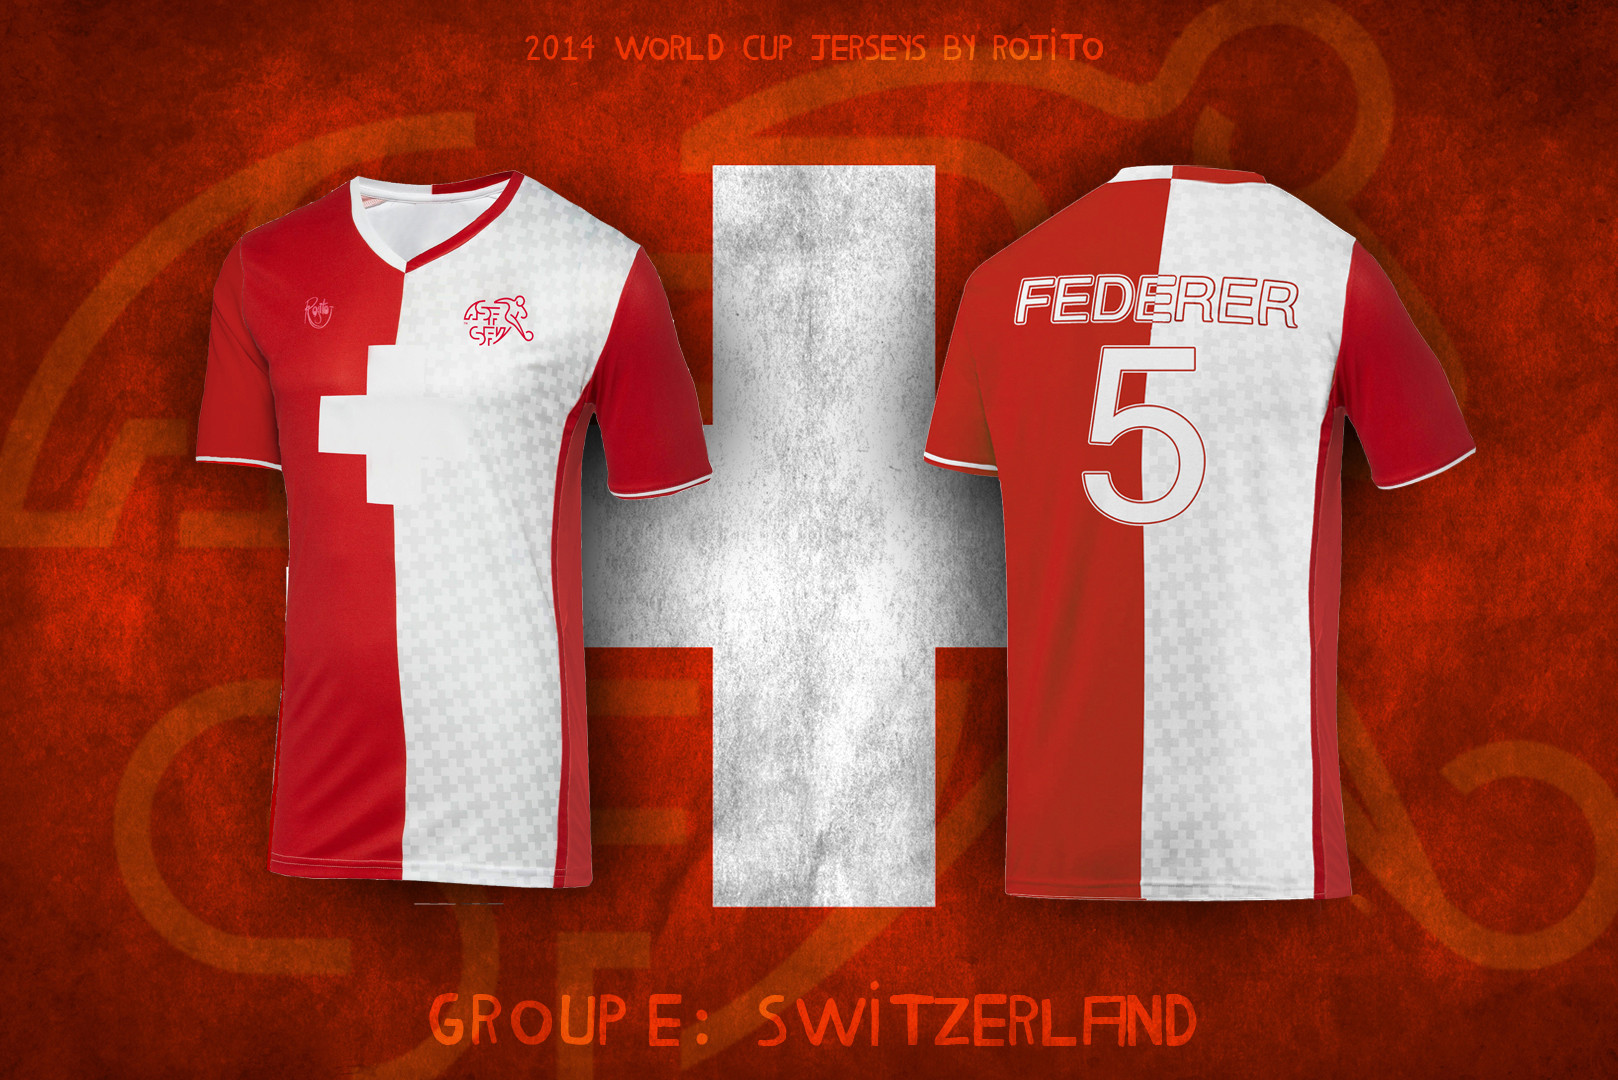 Maillot de foot custom mondial 2014 suisse